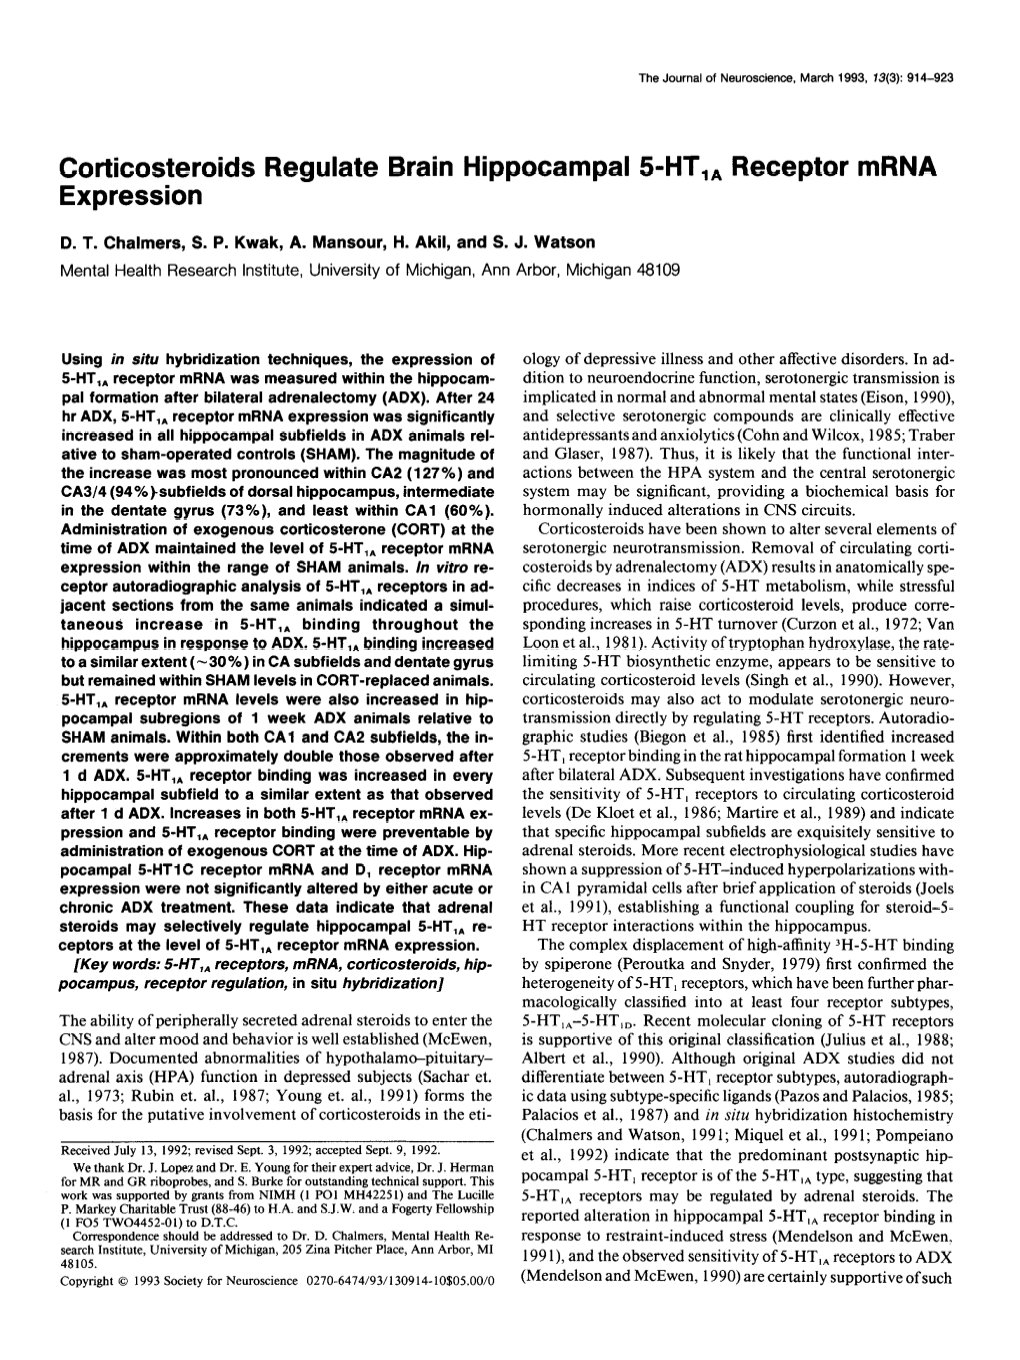 Corticosteroids Regulate Brain Hippocampal SHT,, Receptor Mrna Expression